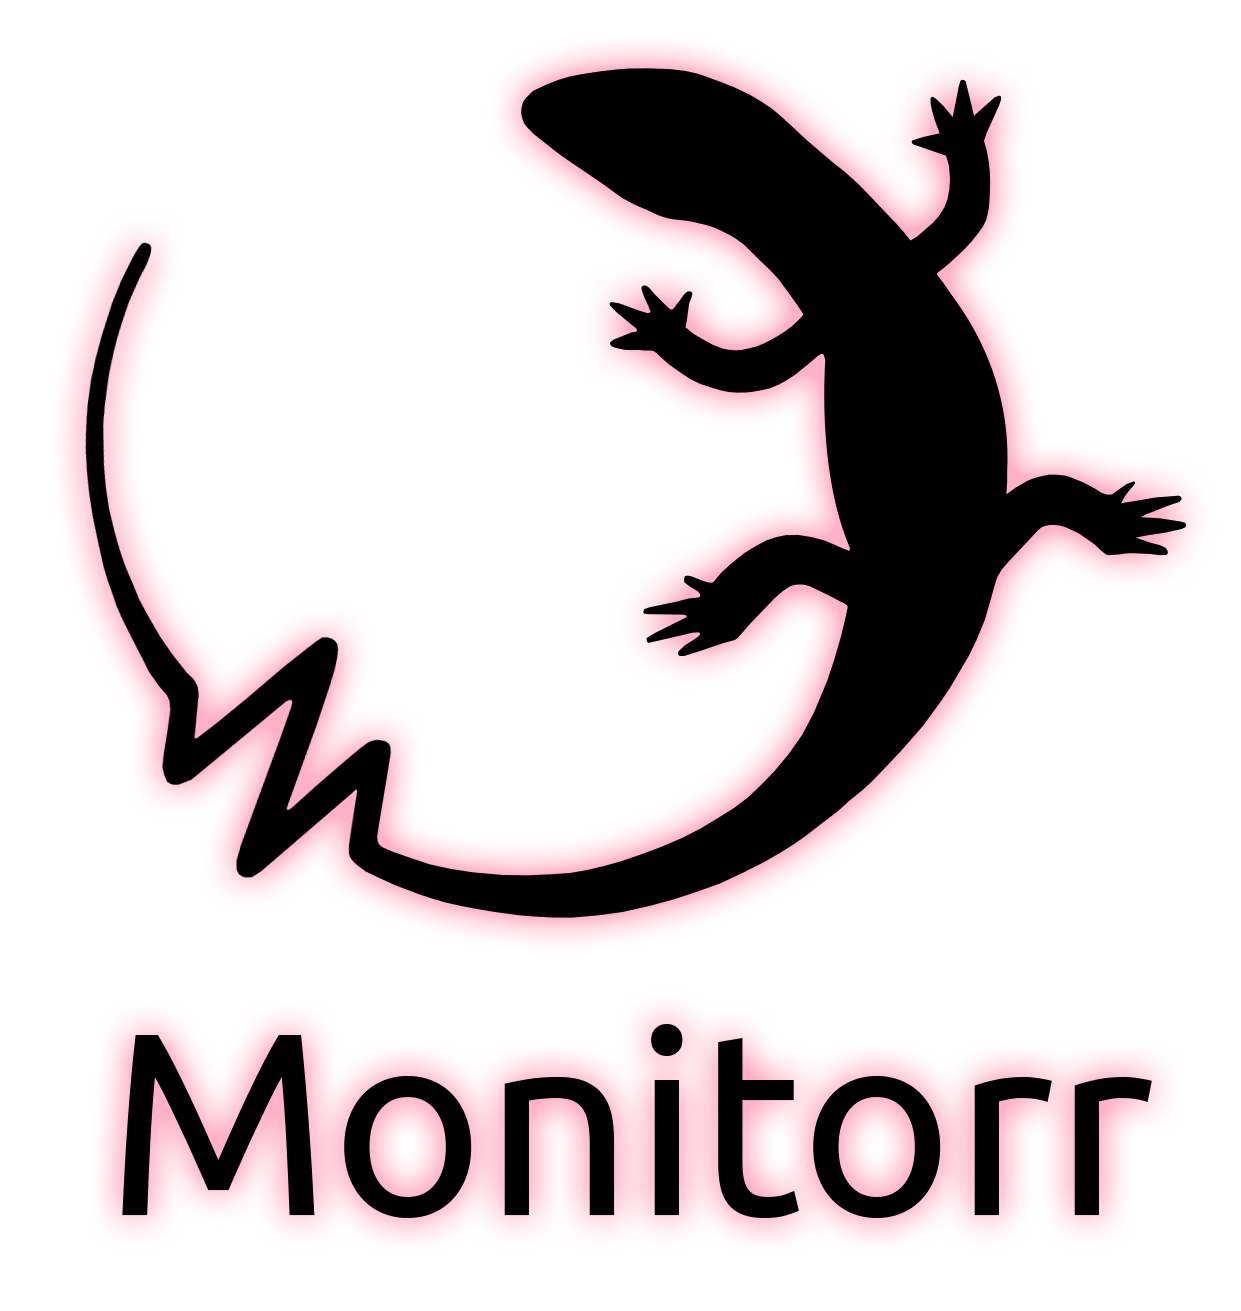 Monitorr